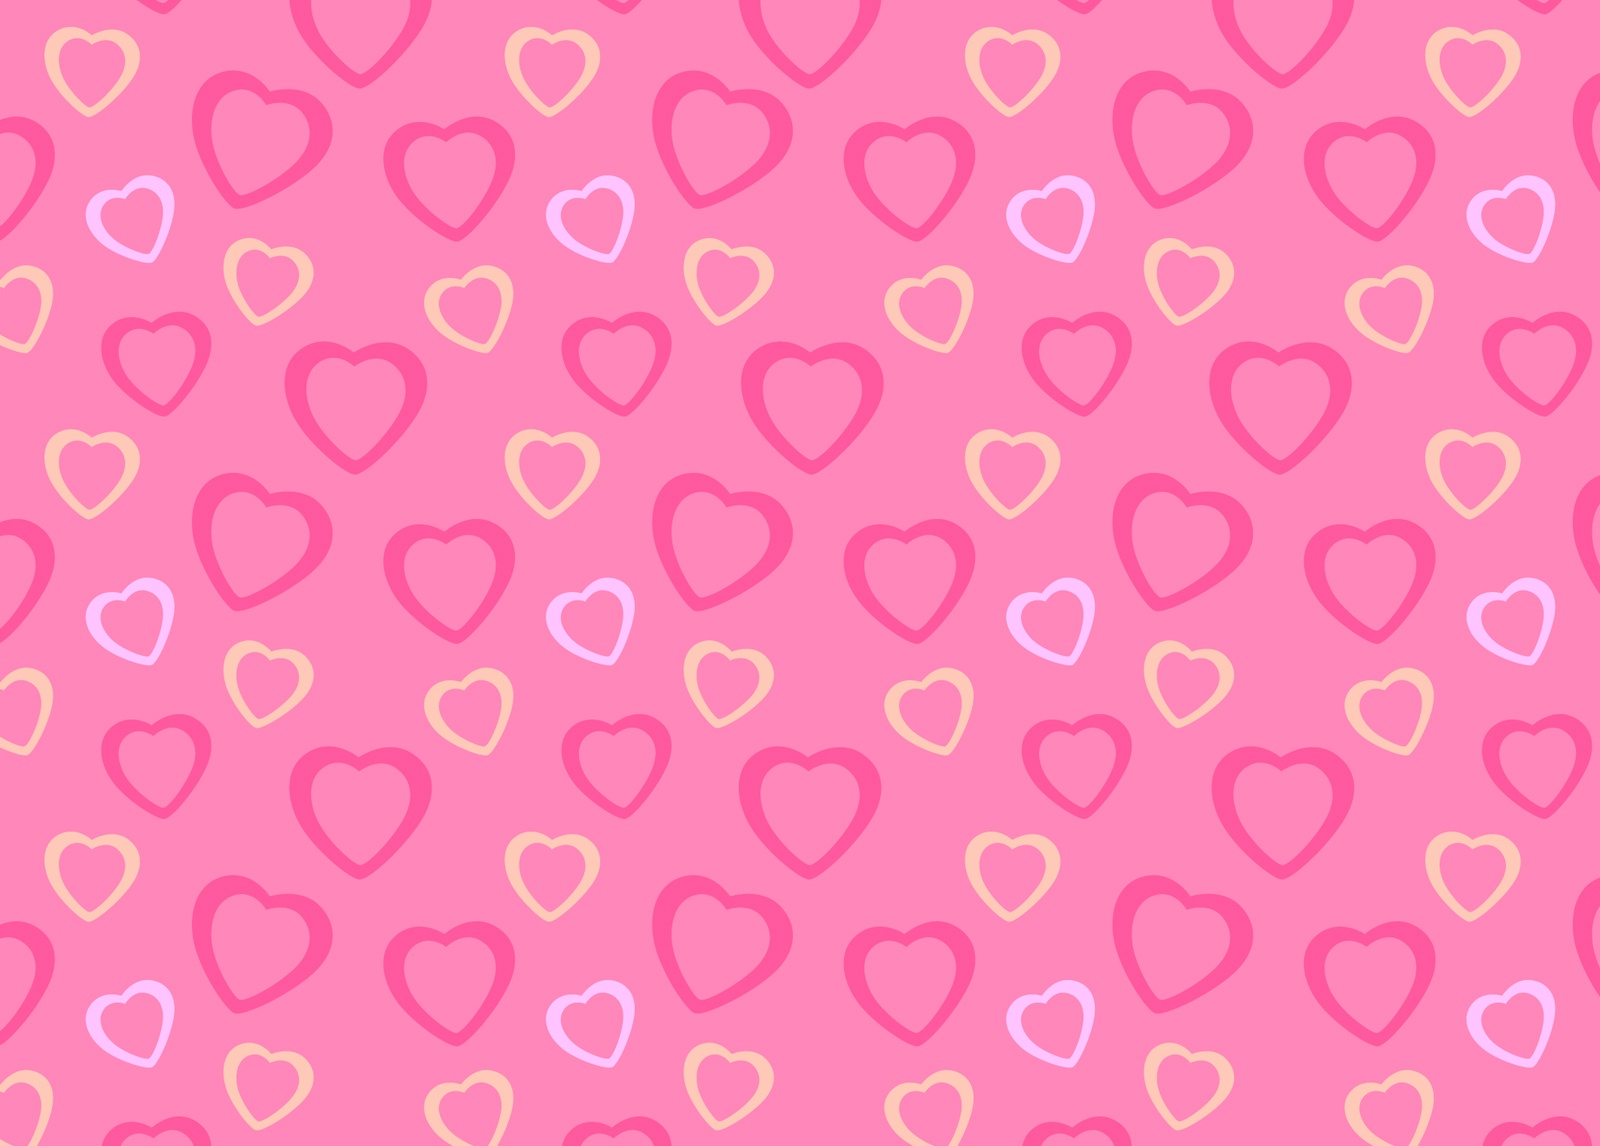 Hearts Background Images WallpaperSafari